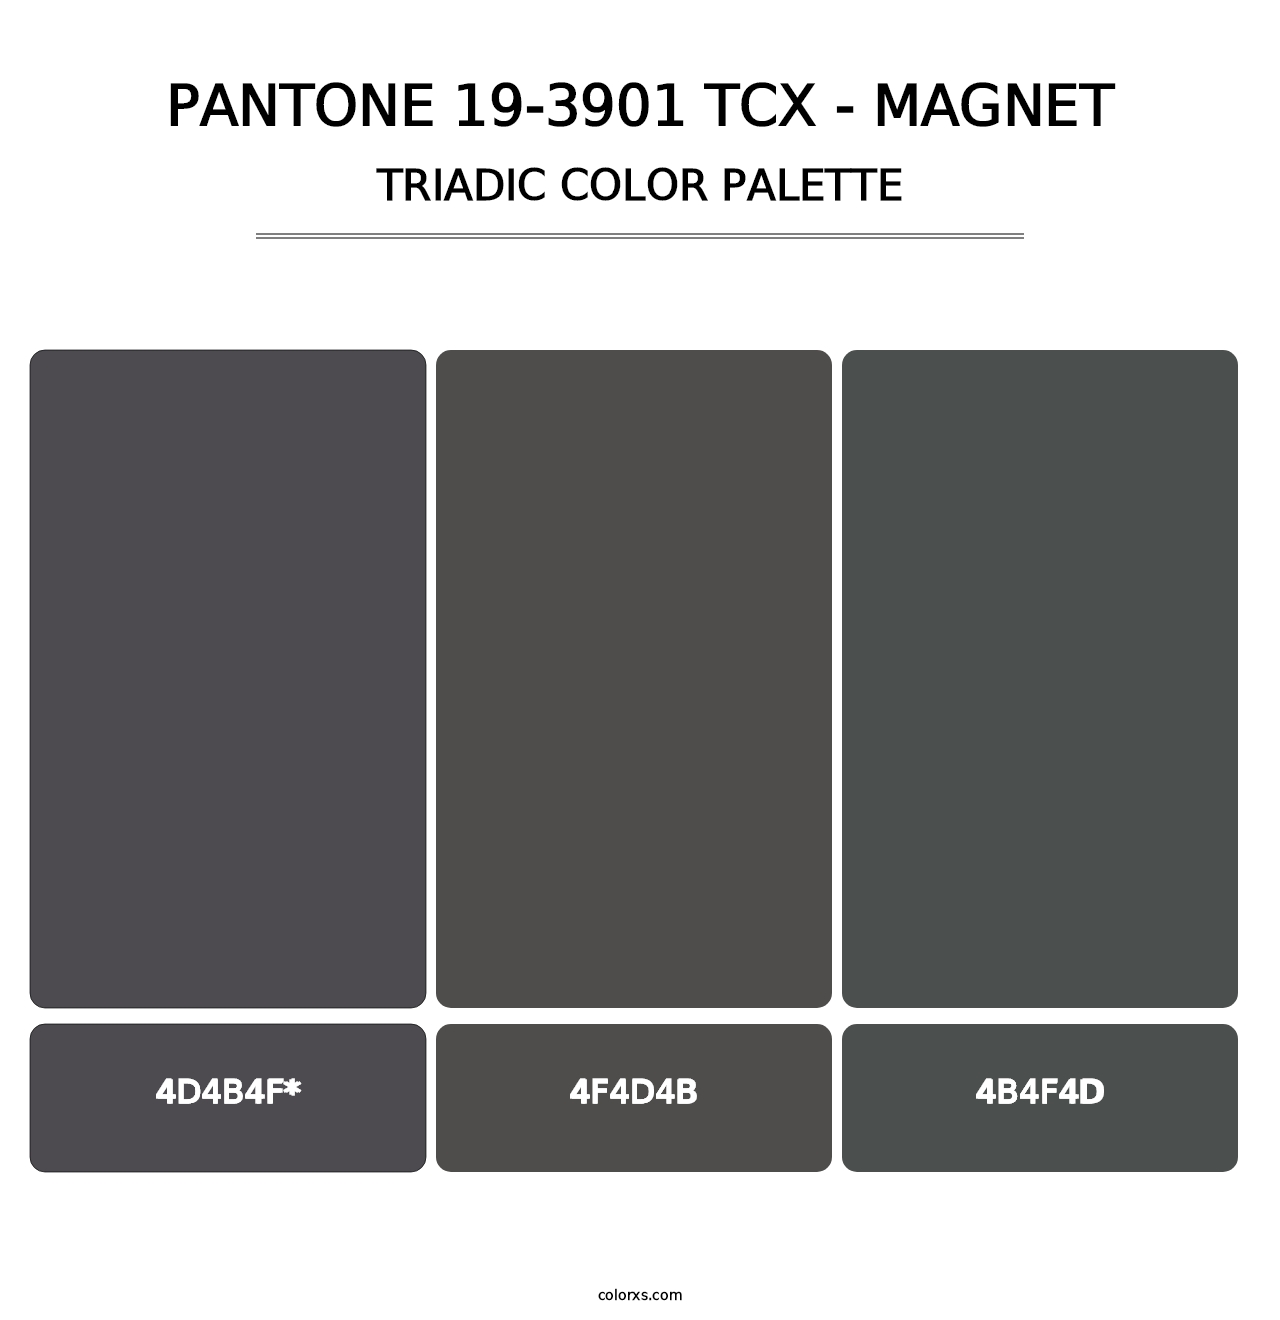 PANTONE 19-3901 TCX - Magnet - Triadic Color Palette